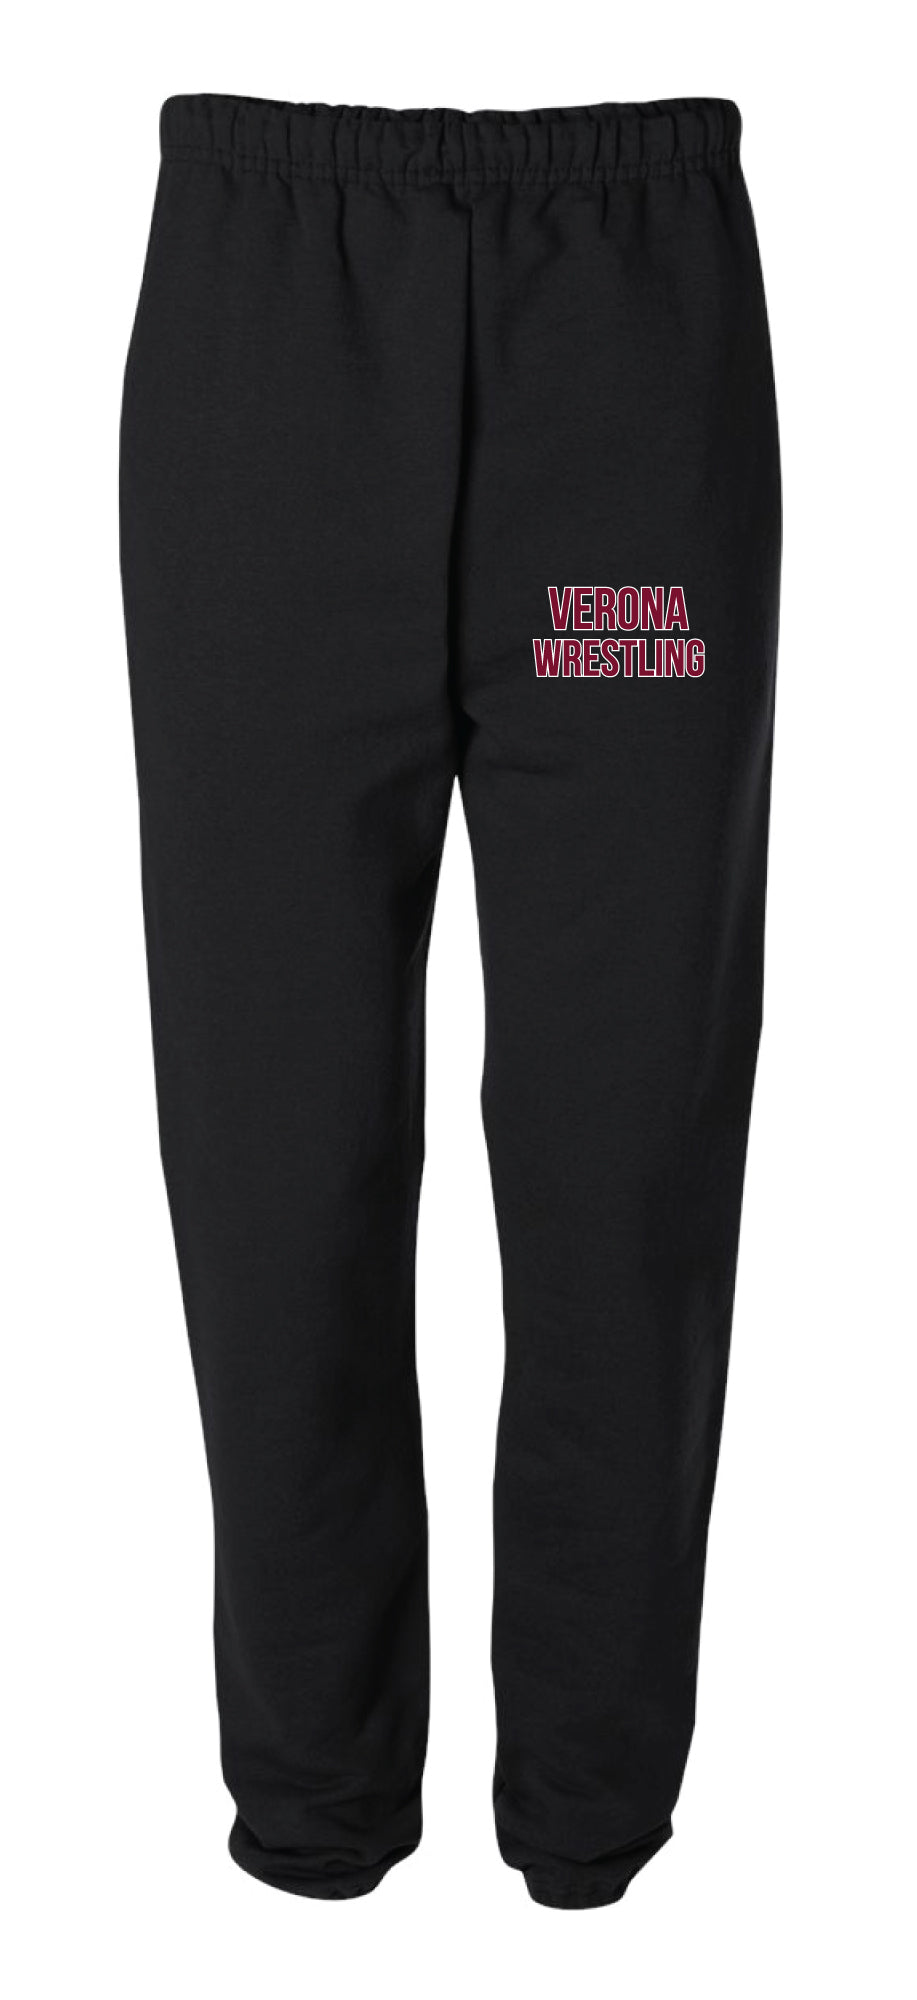 Verona Wrestling Cotton Sweatpants - Black - 5KounT2018